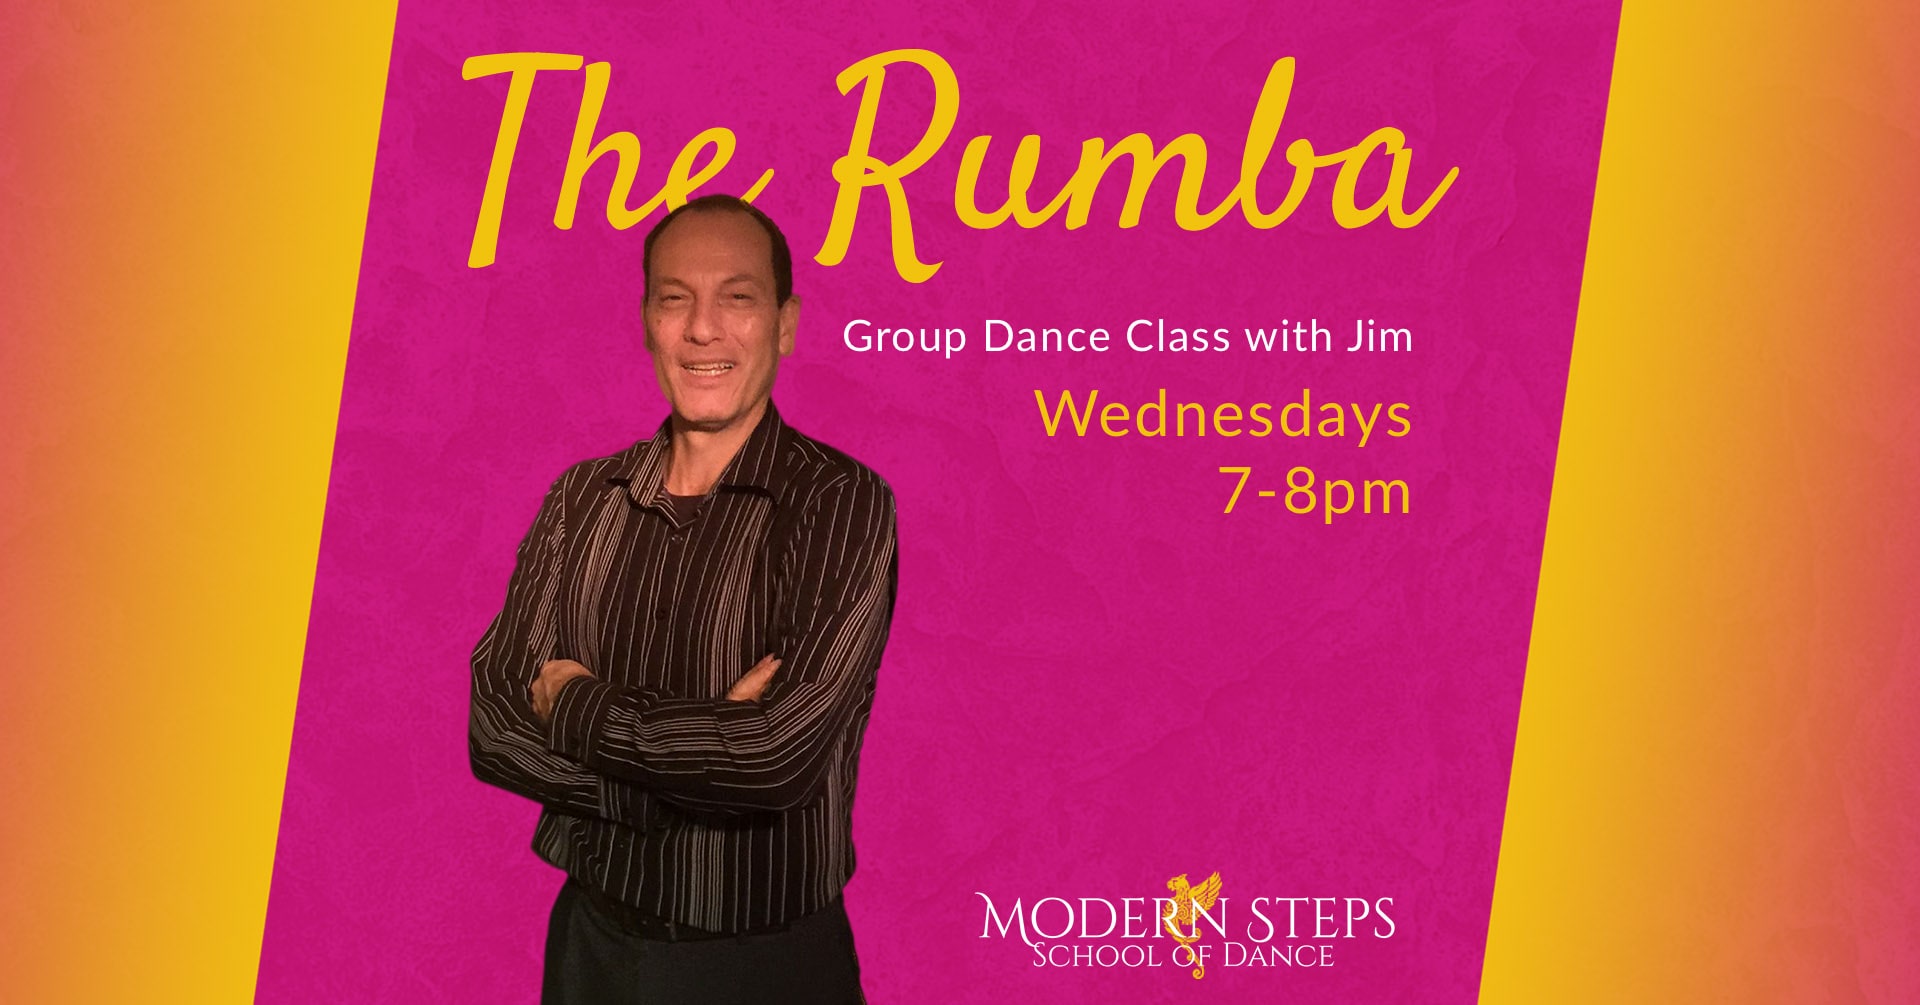 Modern Steps School of Dance Naples Florida The Rumba Dance Classes - Group Ballroom Dance Lessons